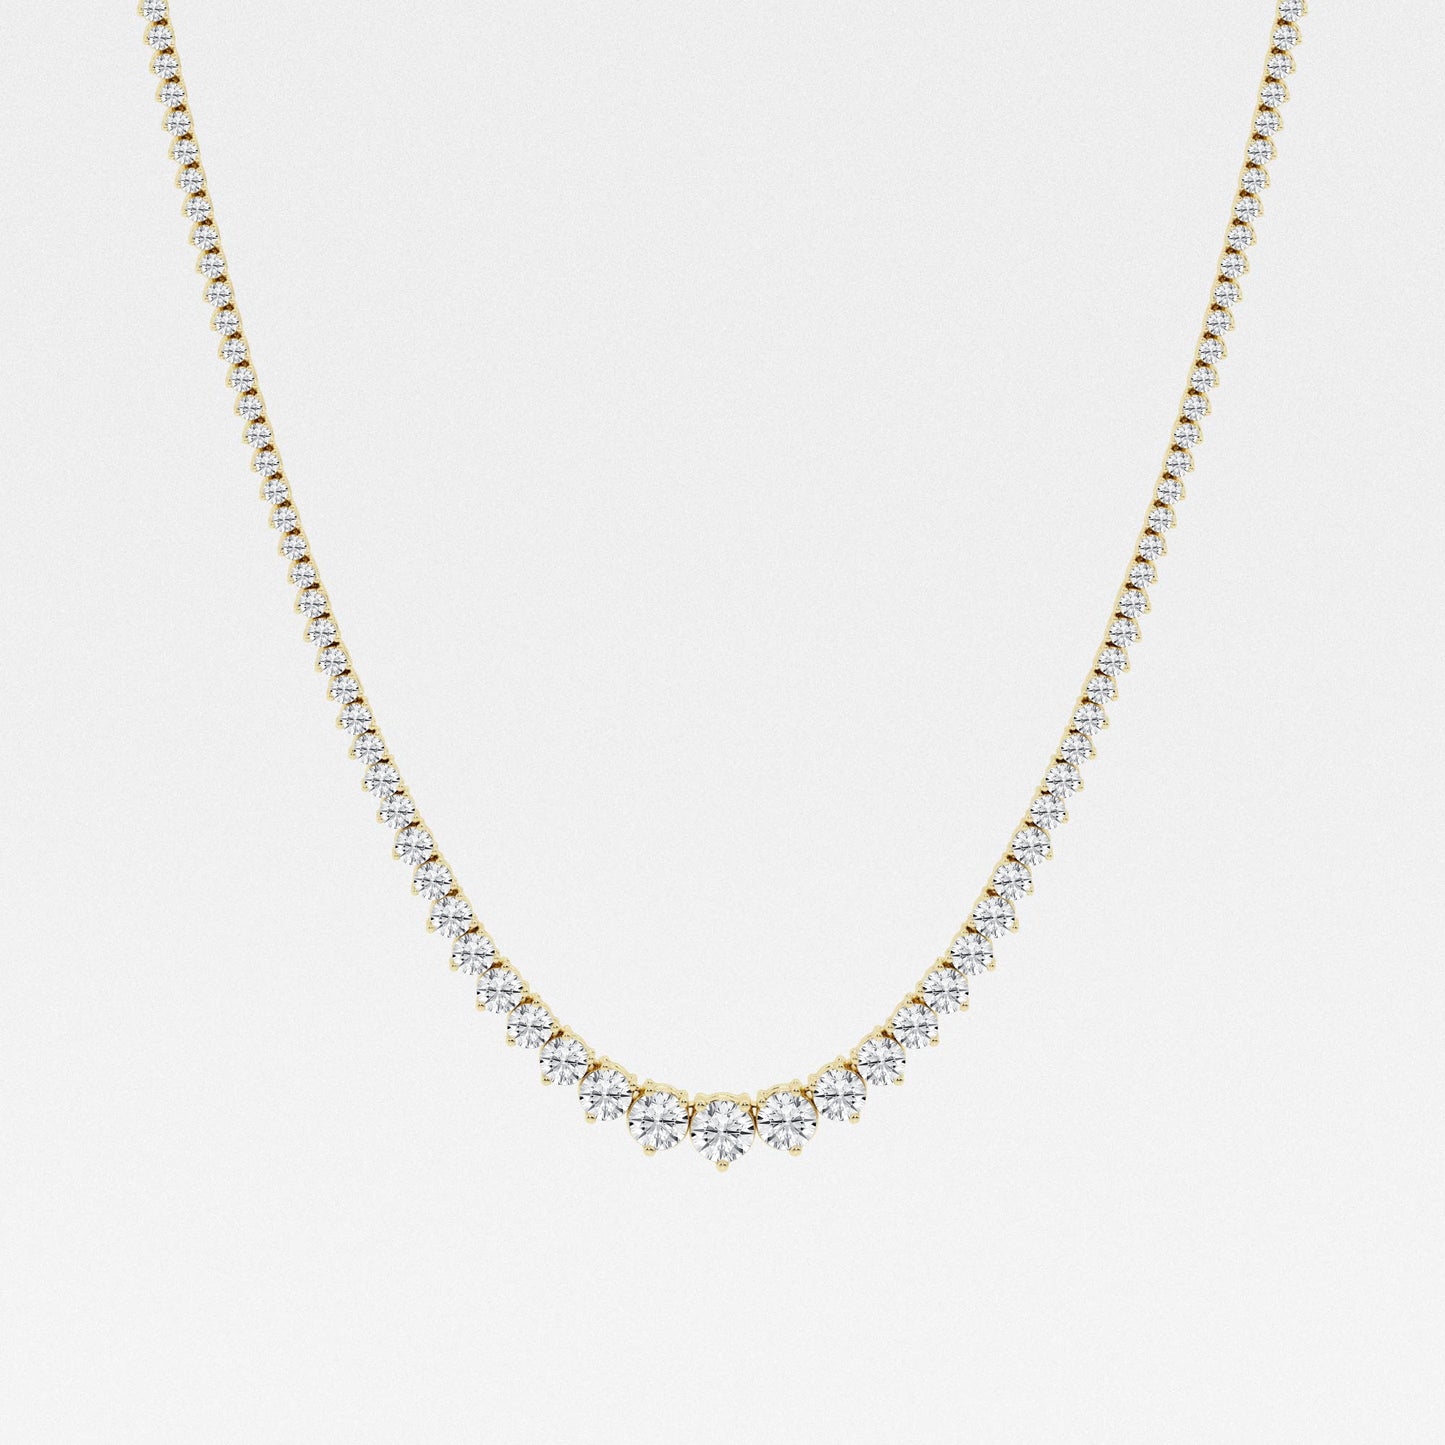 Round Lab Diamond Graduated Riviera Necklace 14K White Gold (12 ct. tw.) (7283085607096)